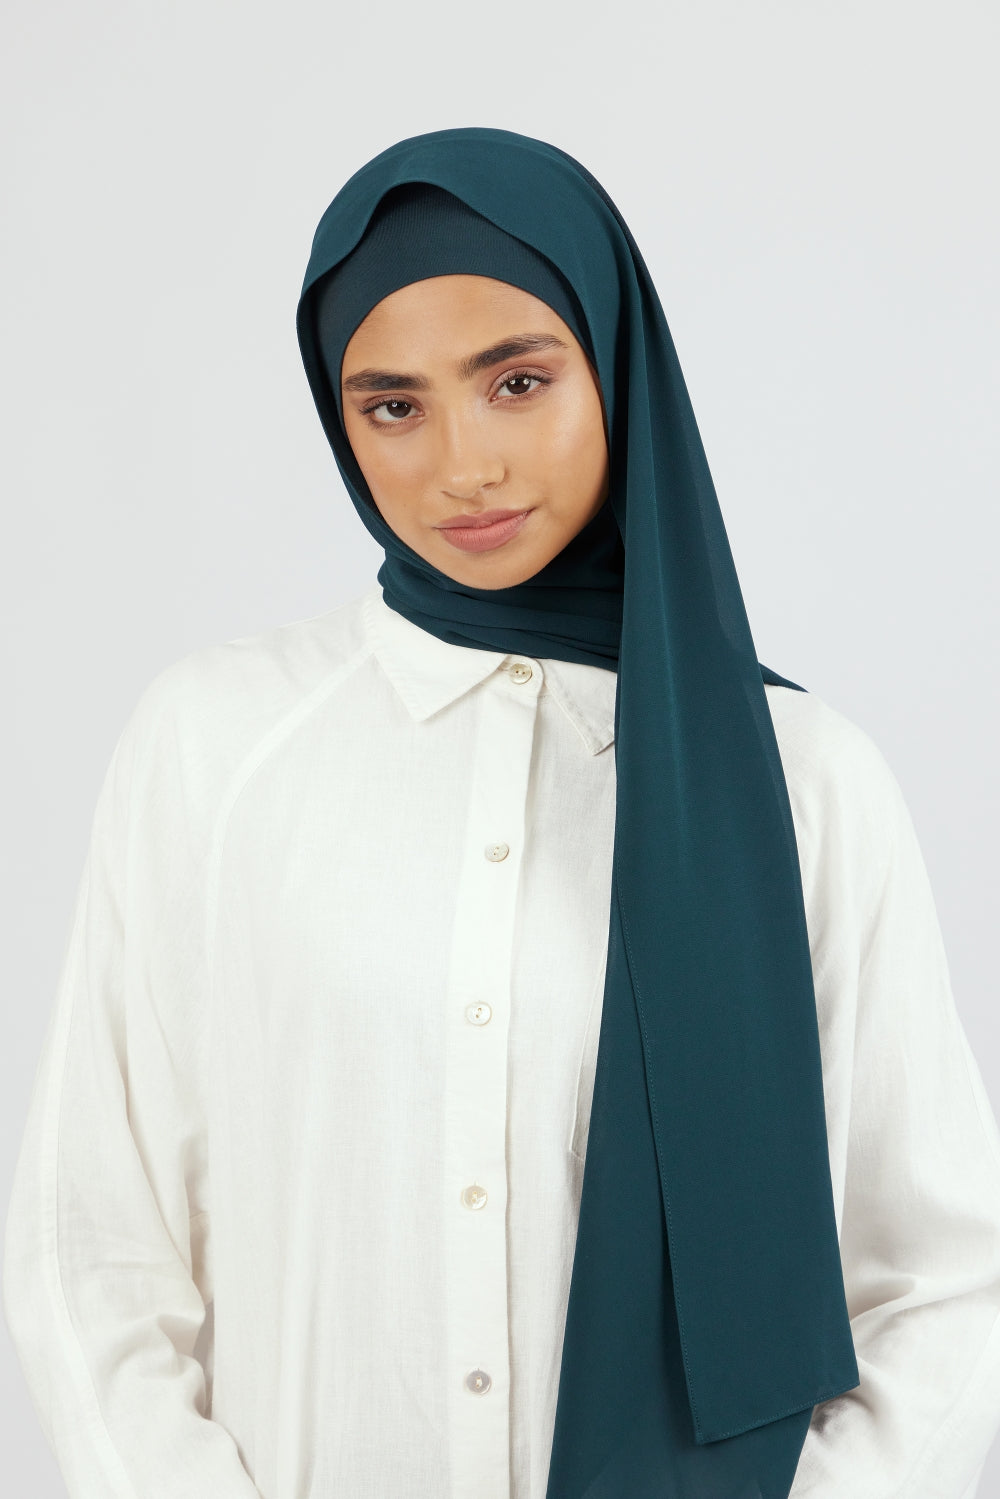 AE - Matching Chiffon Hijab Set - Midnight Teal